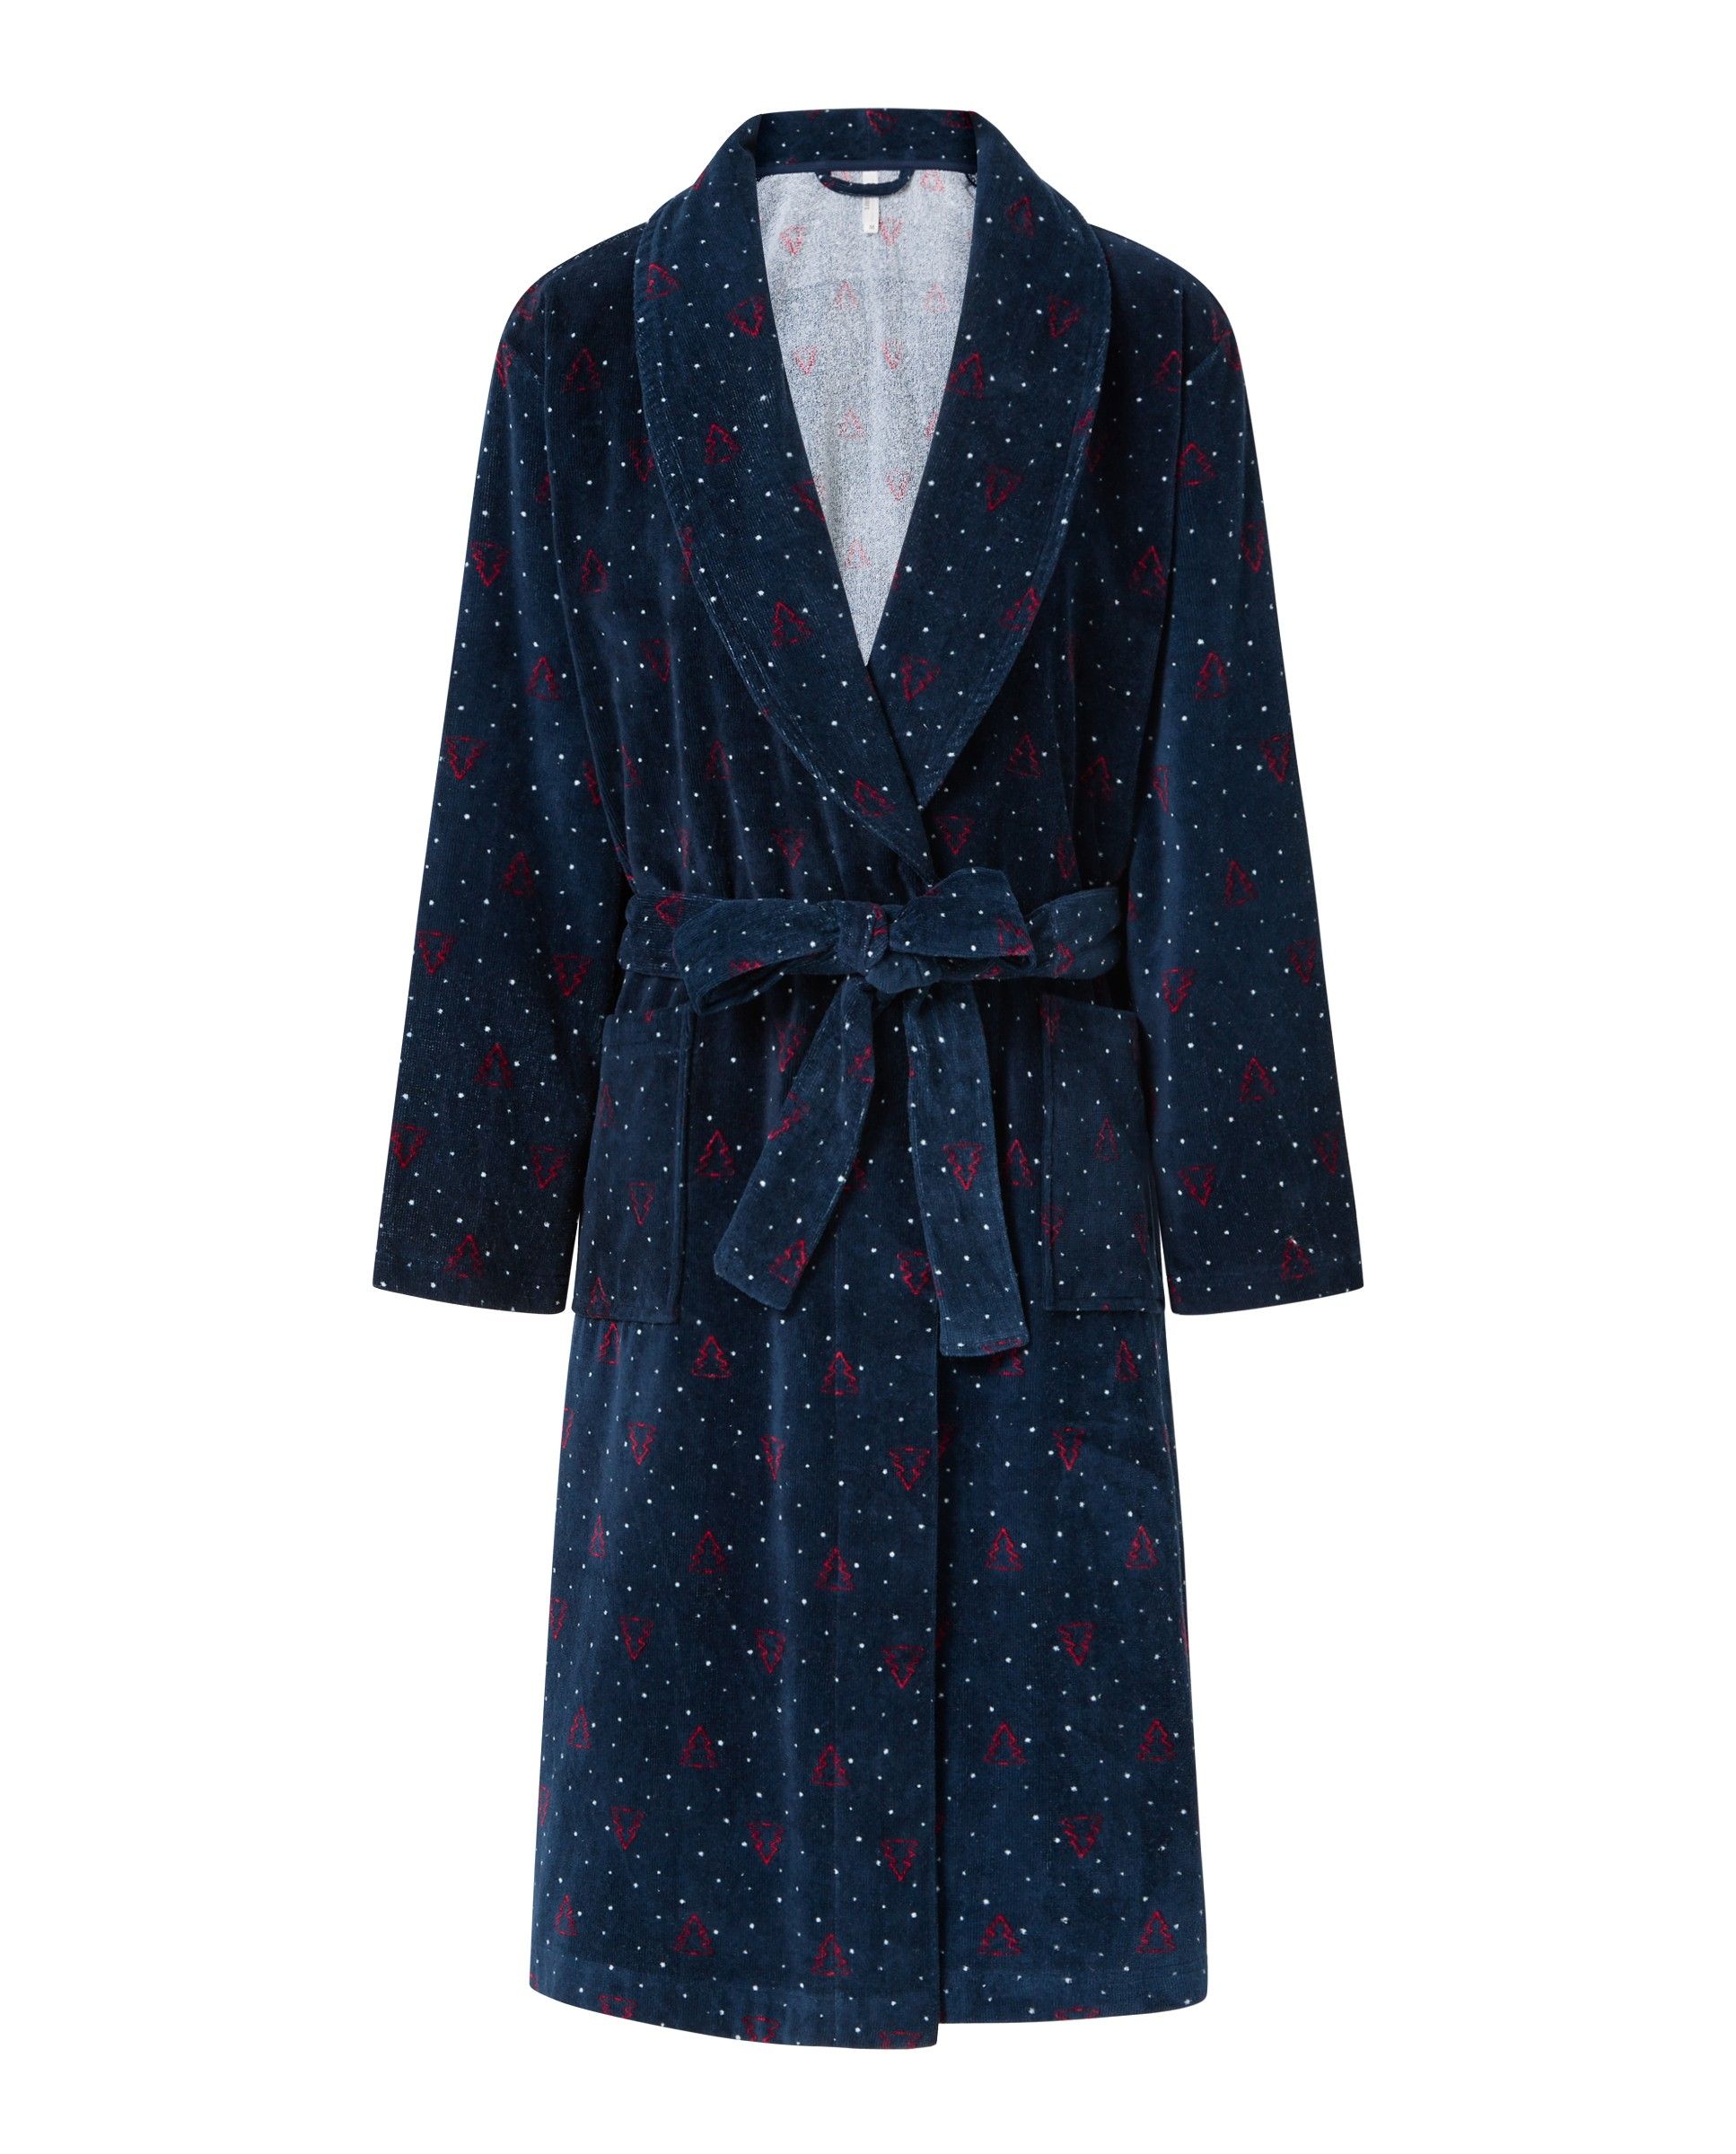 Lohe women's long smocking bathrobe with cross over, fir tree print.